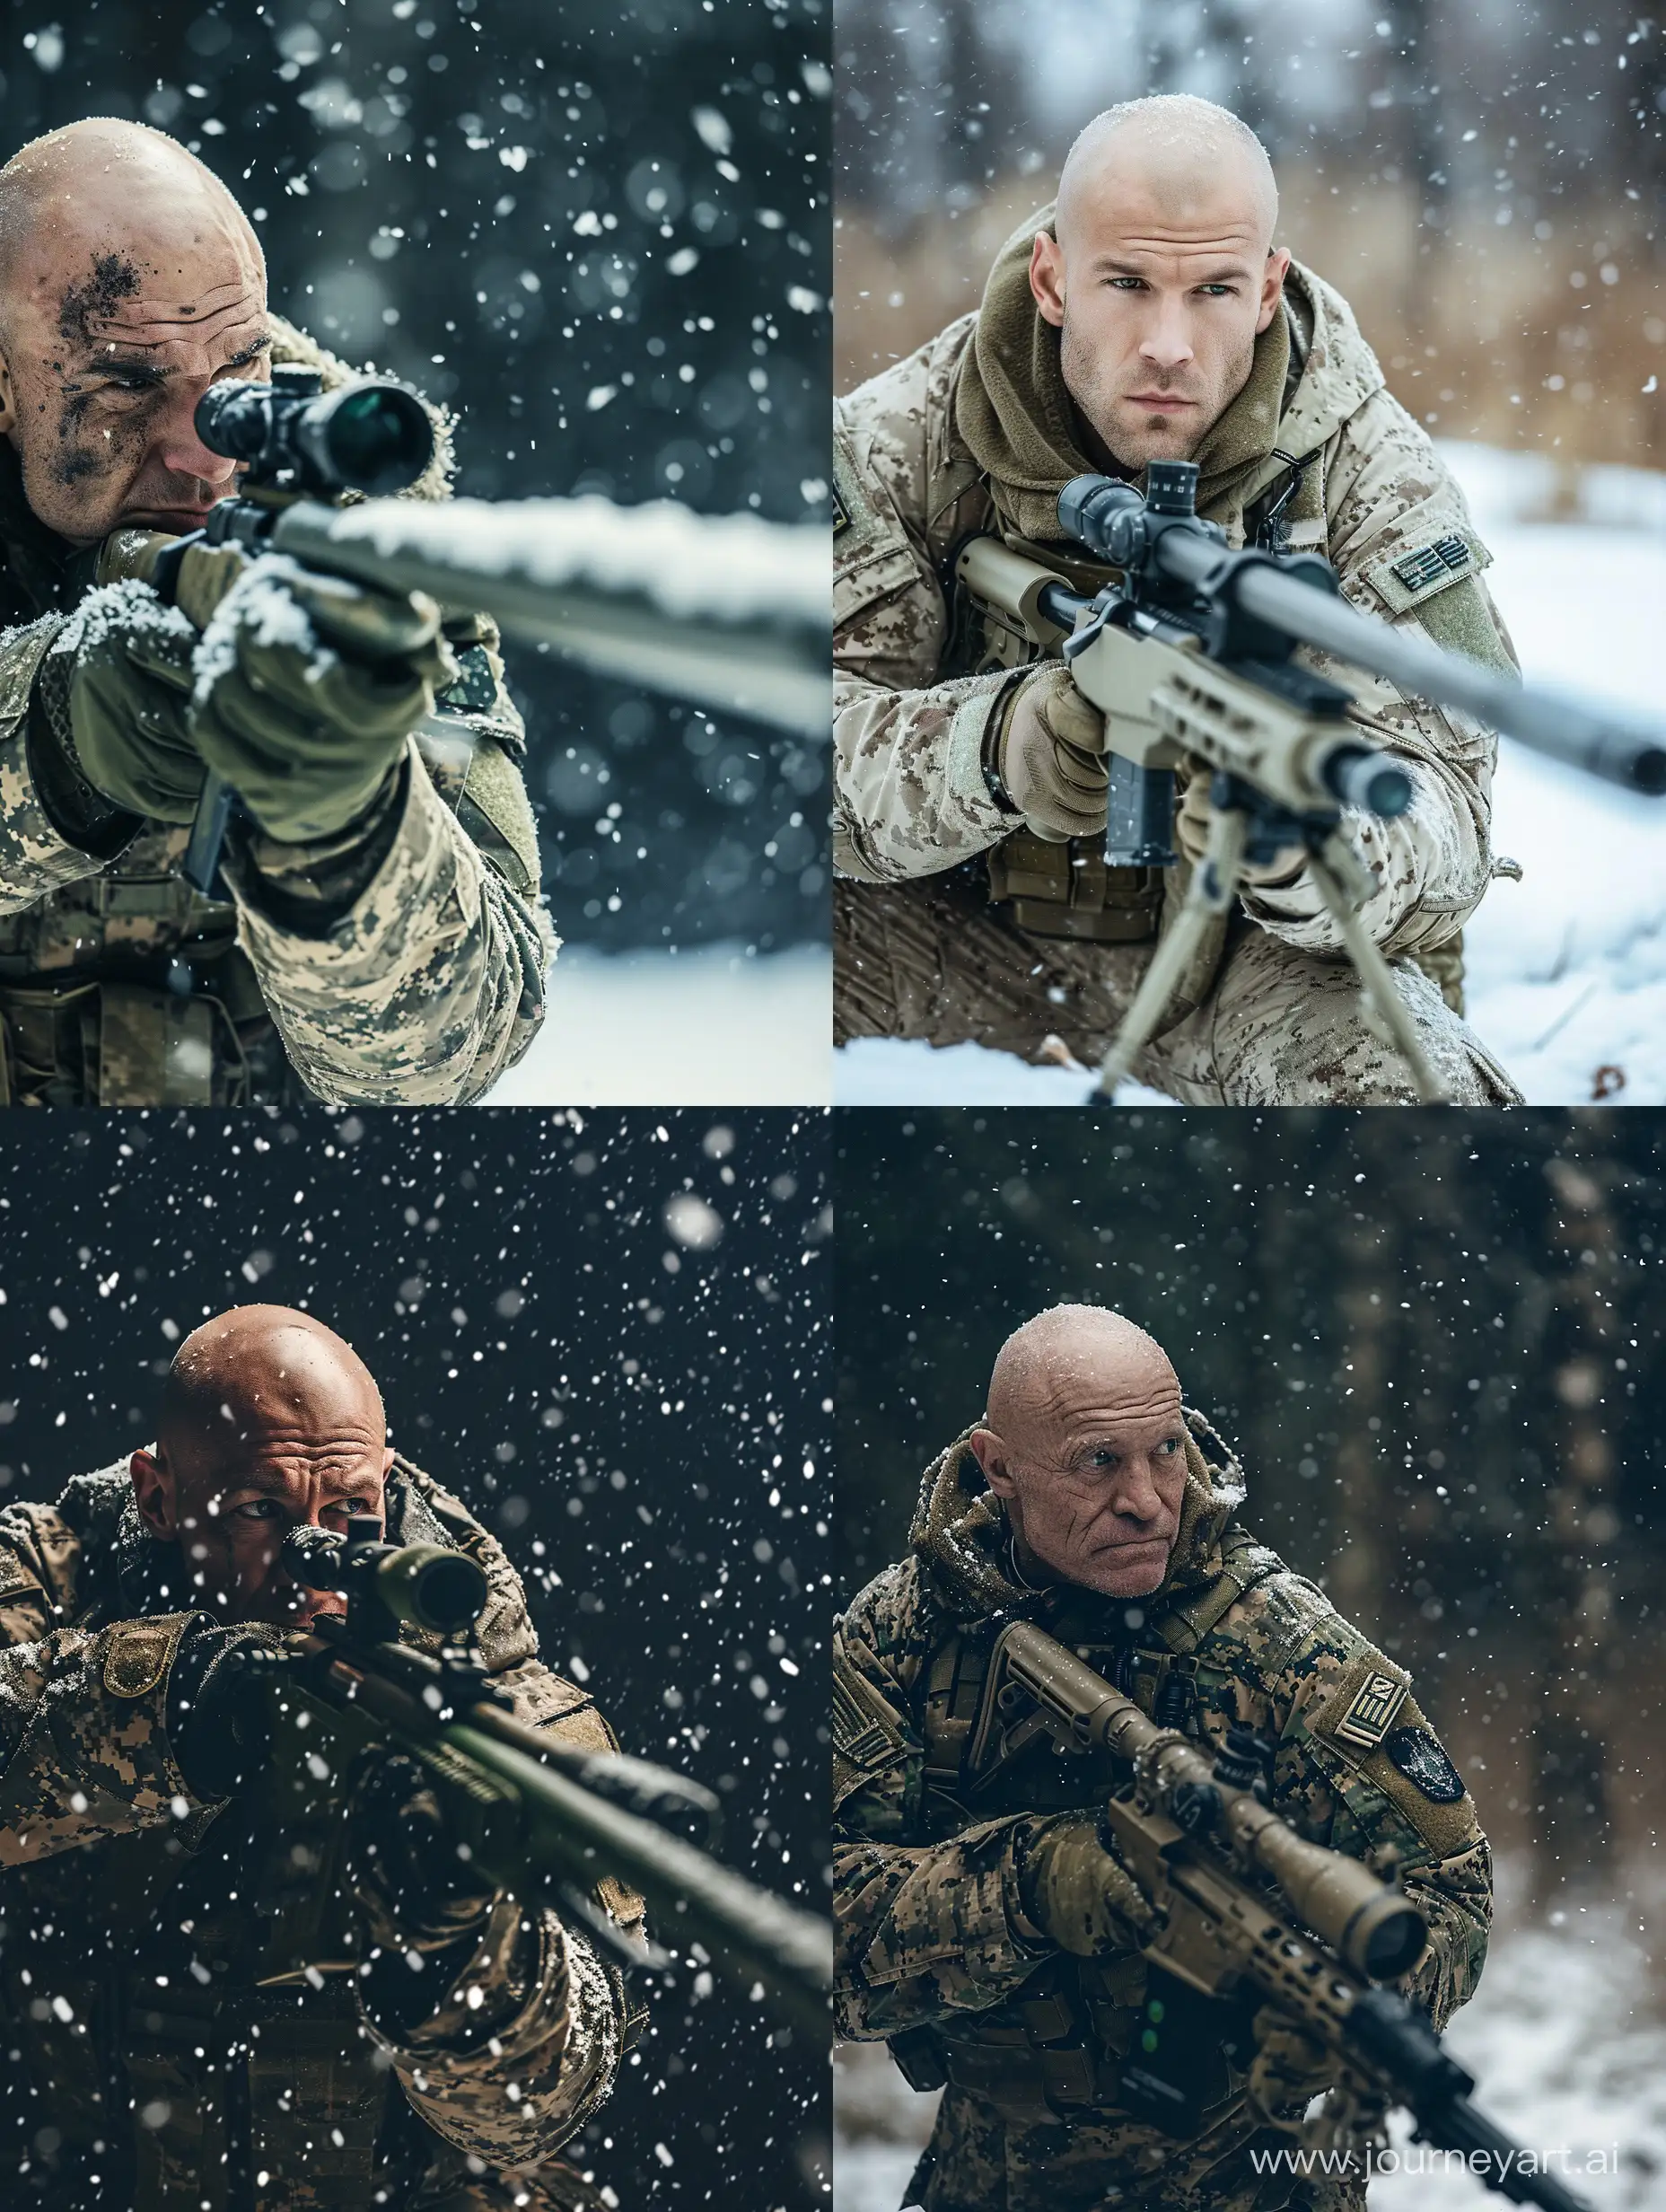 Rugged-Military-Sniper-in-Snowy-Ambush